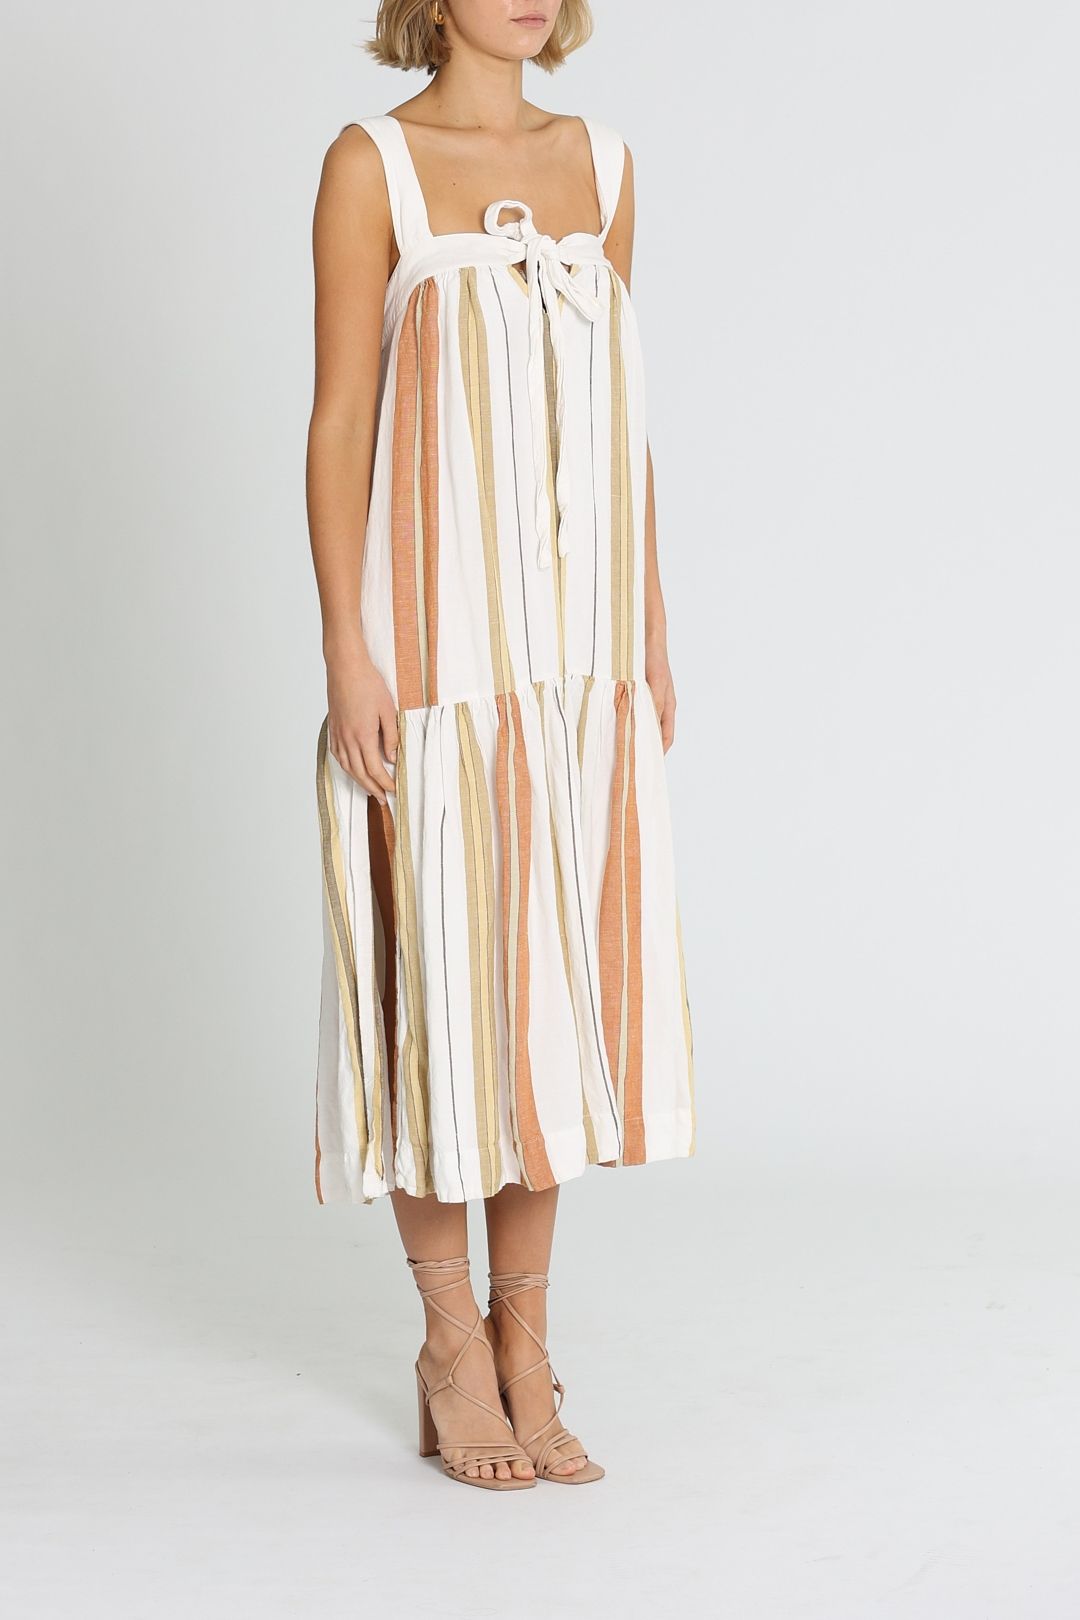 Shona Joy Suzana Midi Dress Stripe